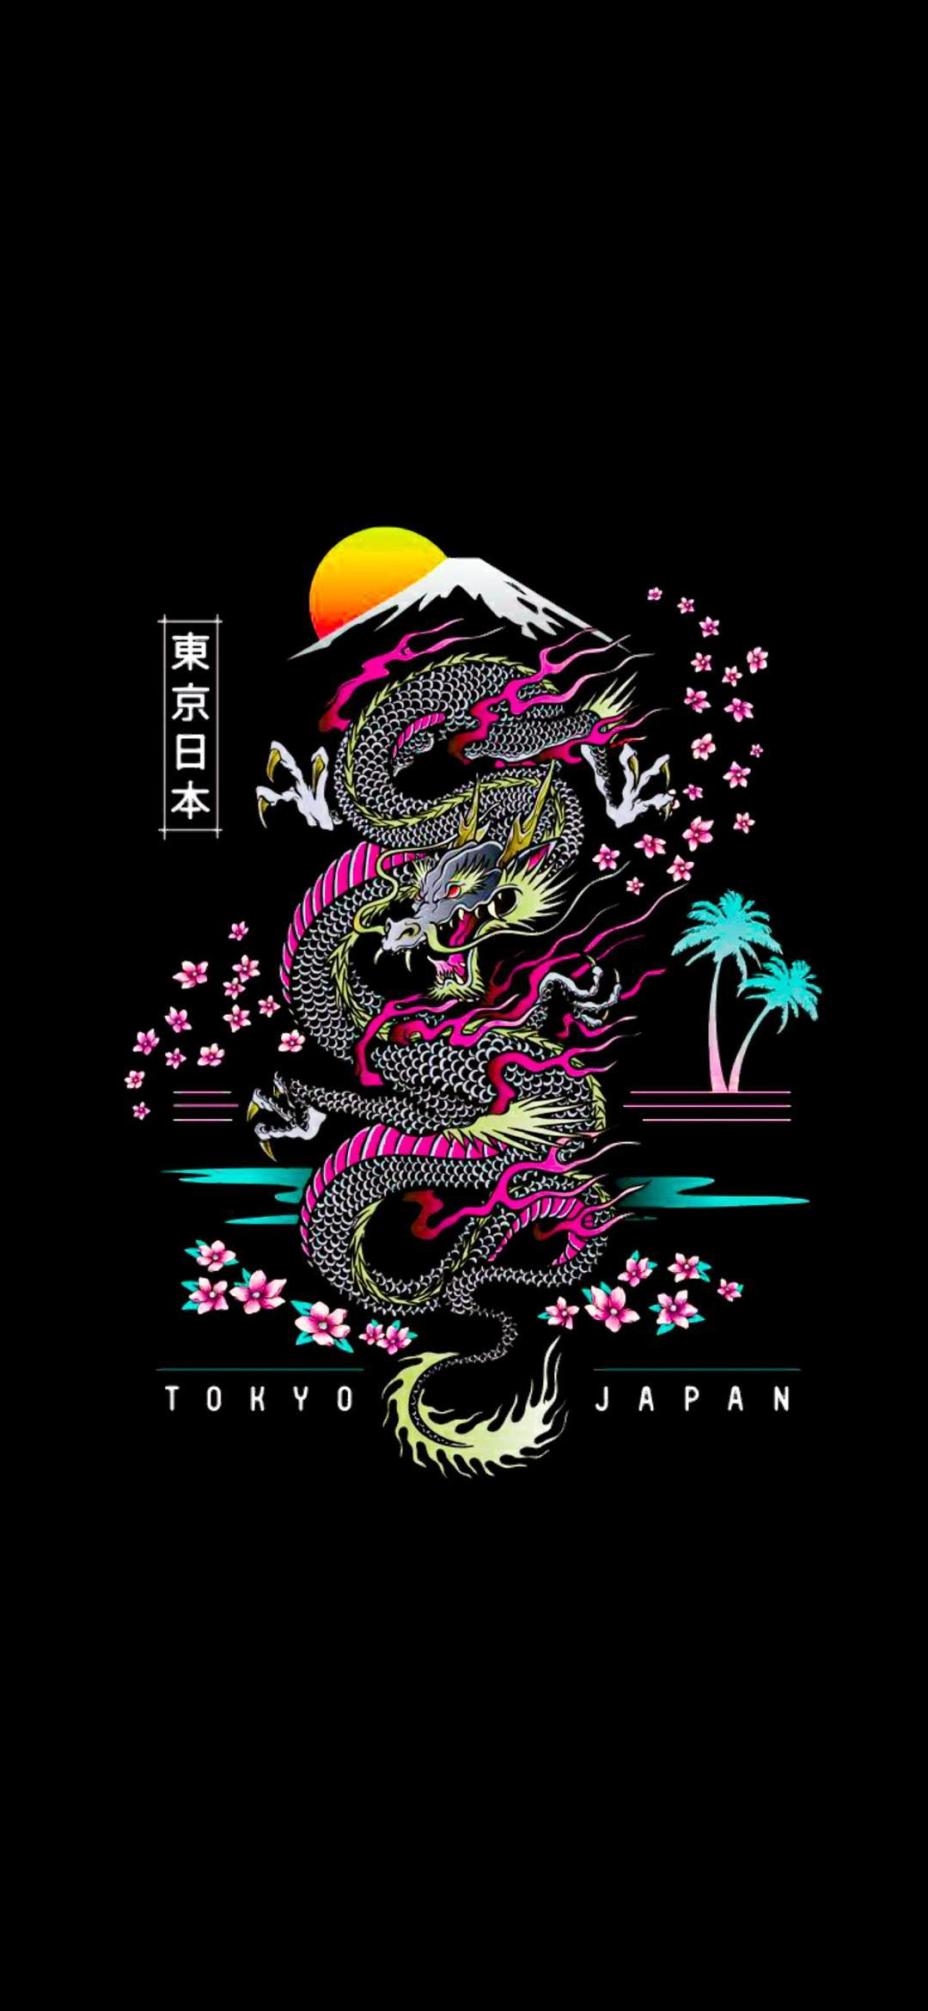 Tokyo Japan Dragon Wallpaper   Wallpapers For Tech